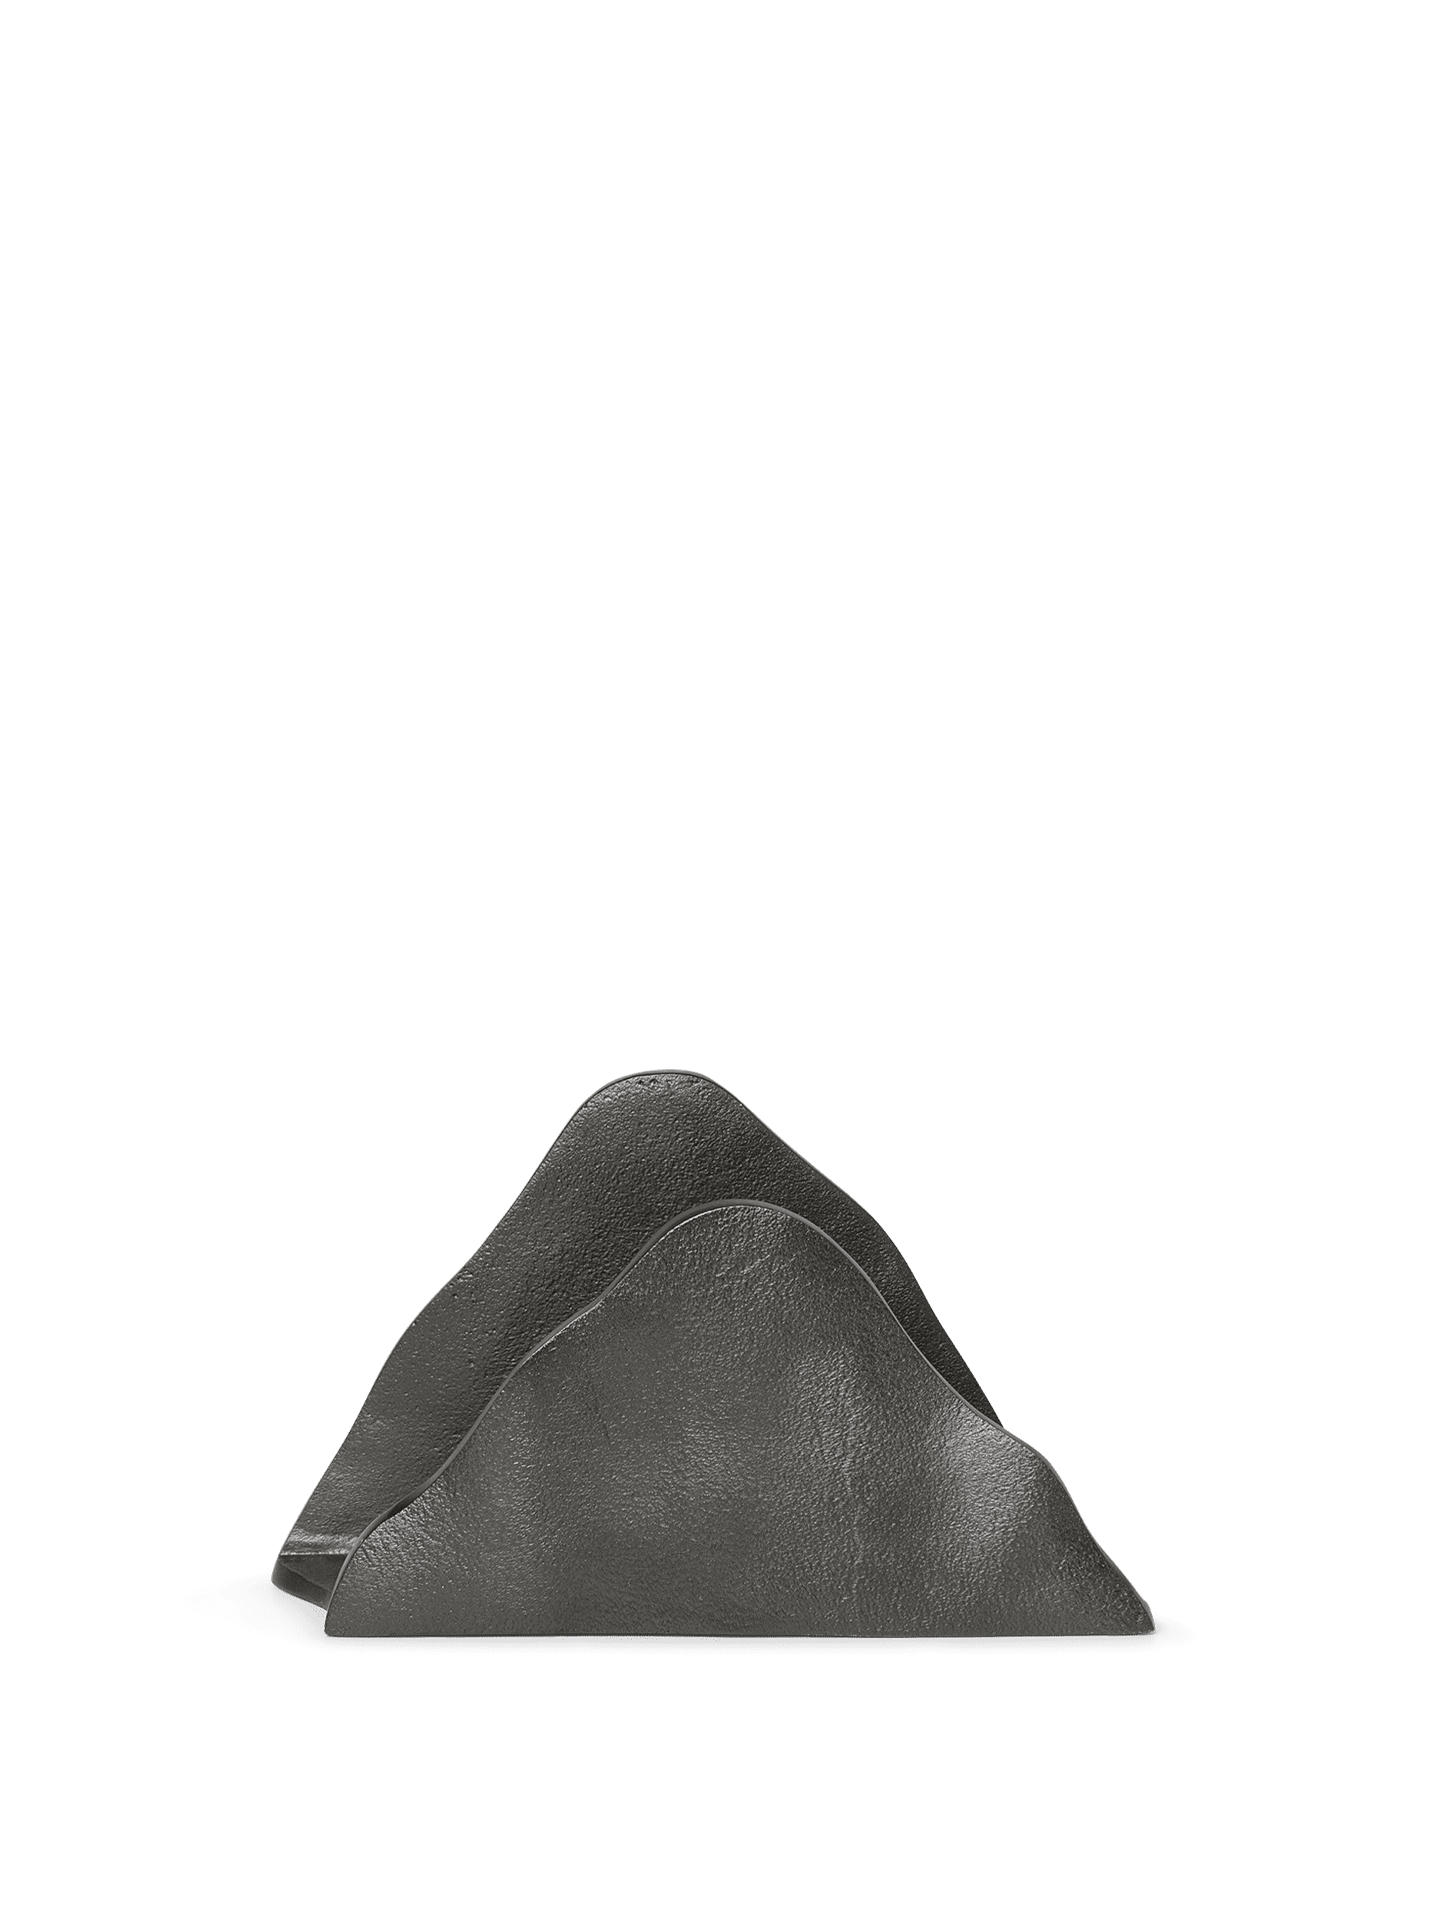 Yama Holder - Blackened Aluminium napkin / letter / desk